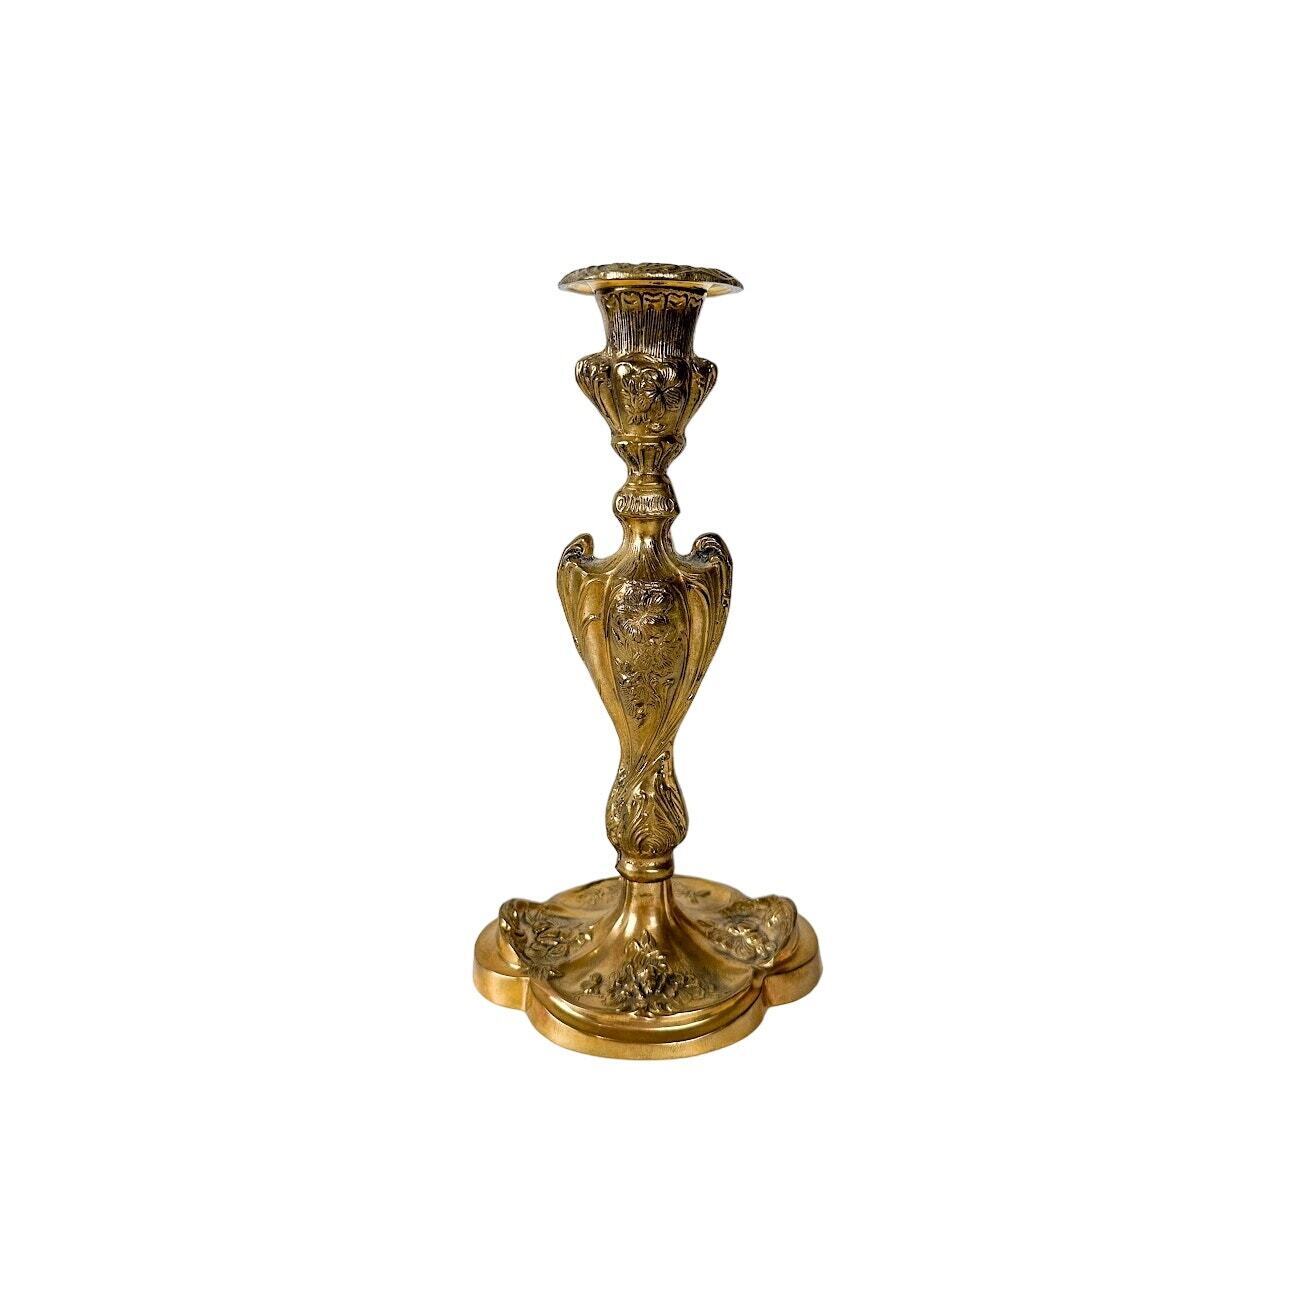 Vintage Art Nouveau Style Heavy Brass Candlestick Holder with Floral Designs